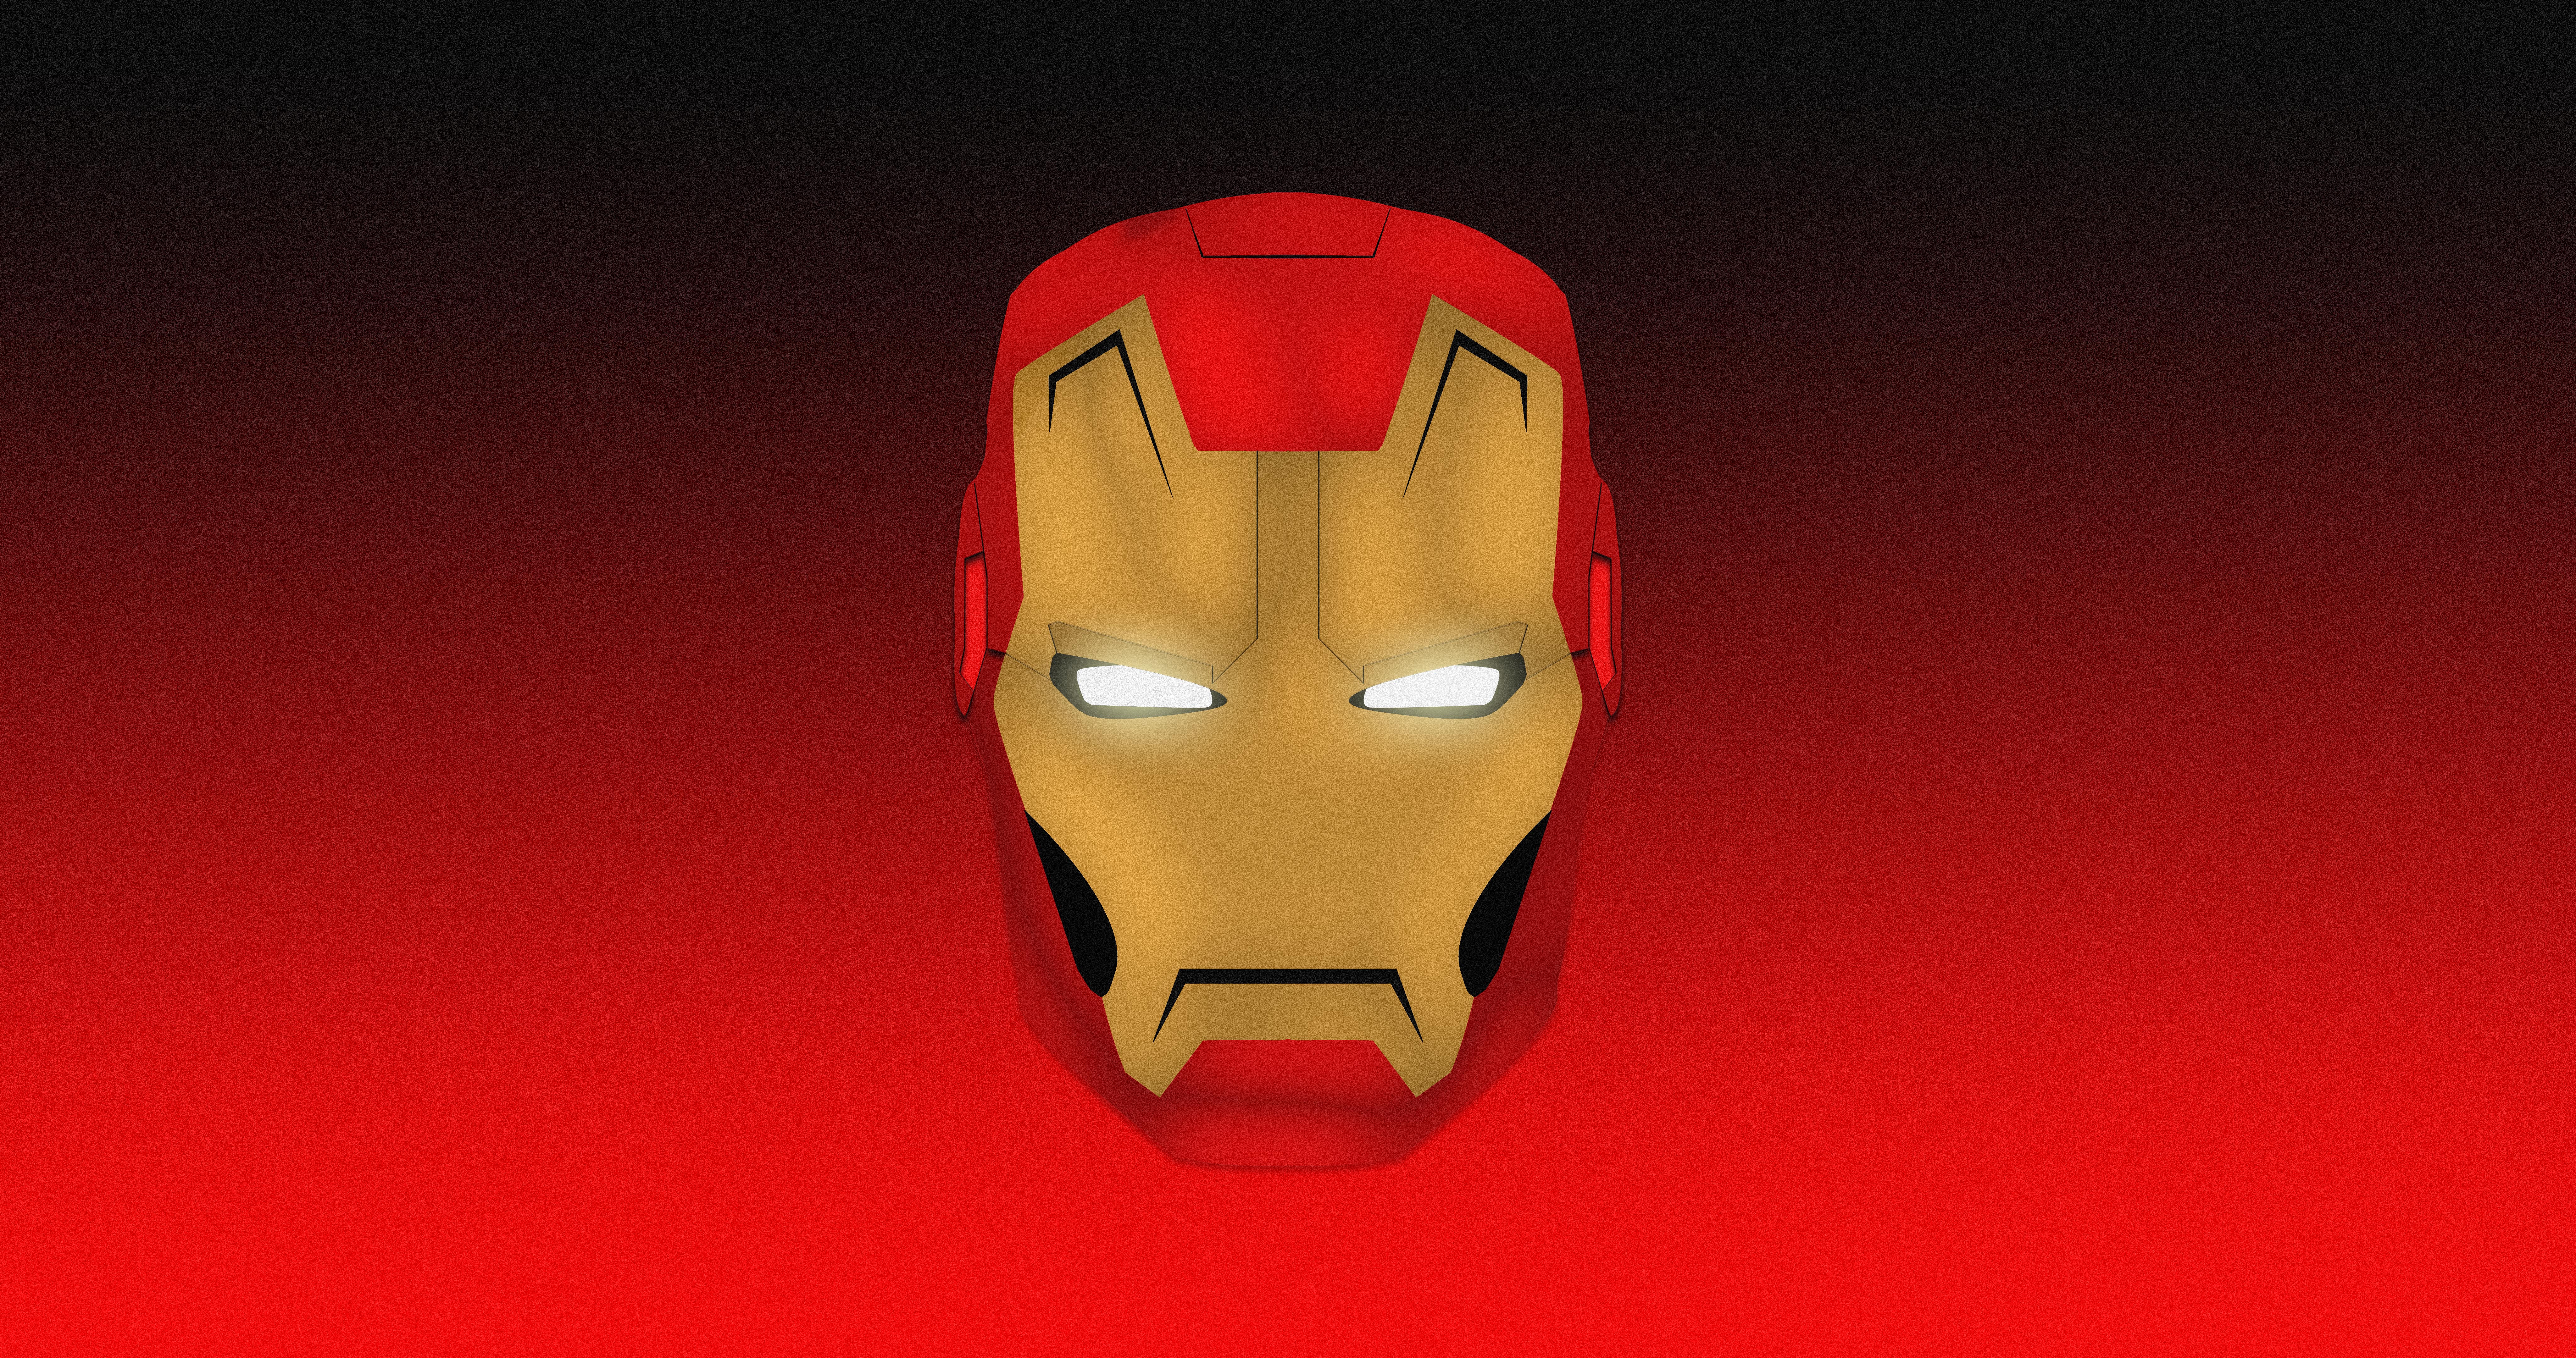 Iron Man Marvel Comics Marvel Cinematic Universe Comic Books Comic Art Superhero Tony Stark Red Helm 8192x4320